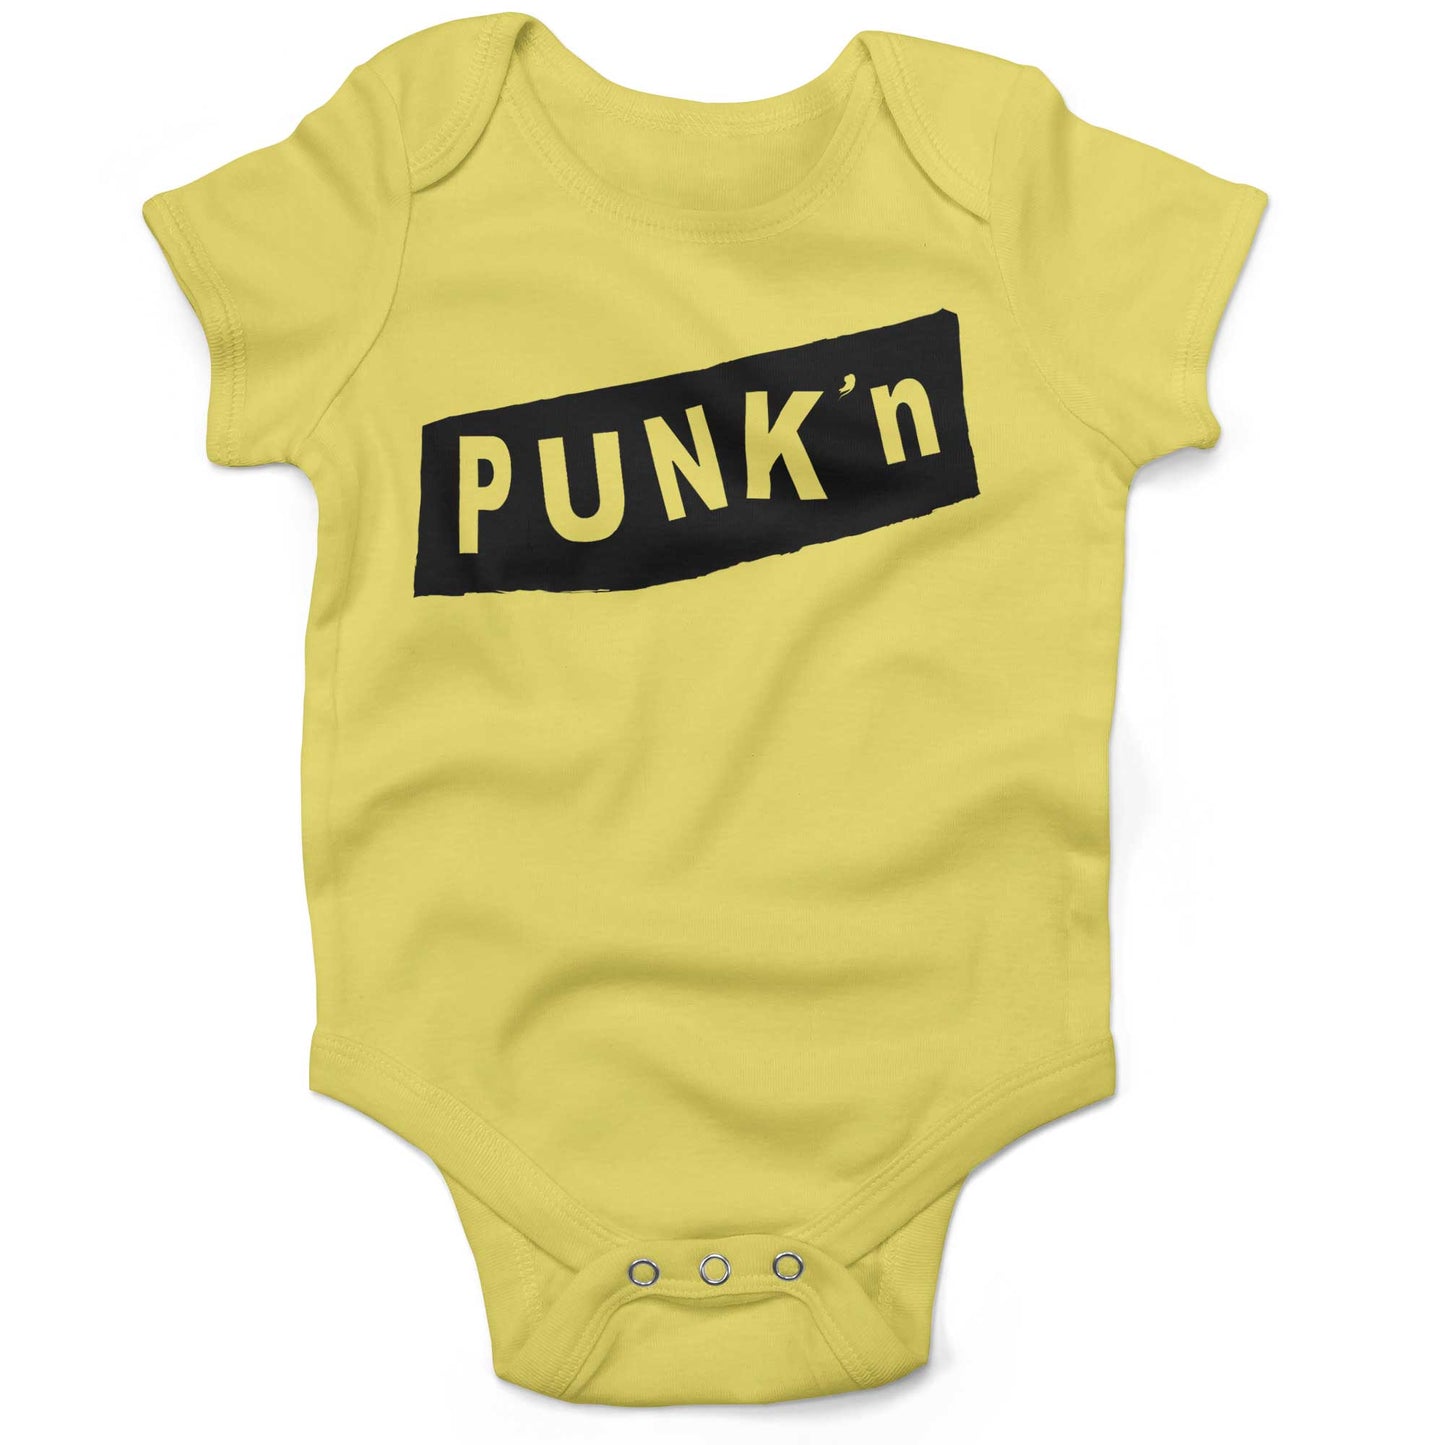 Pumpkin Punk'n Infant Bodysuit or Raglan Tee-Yellow-3-6 months